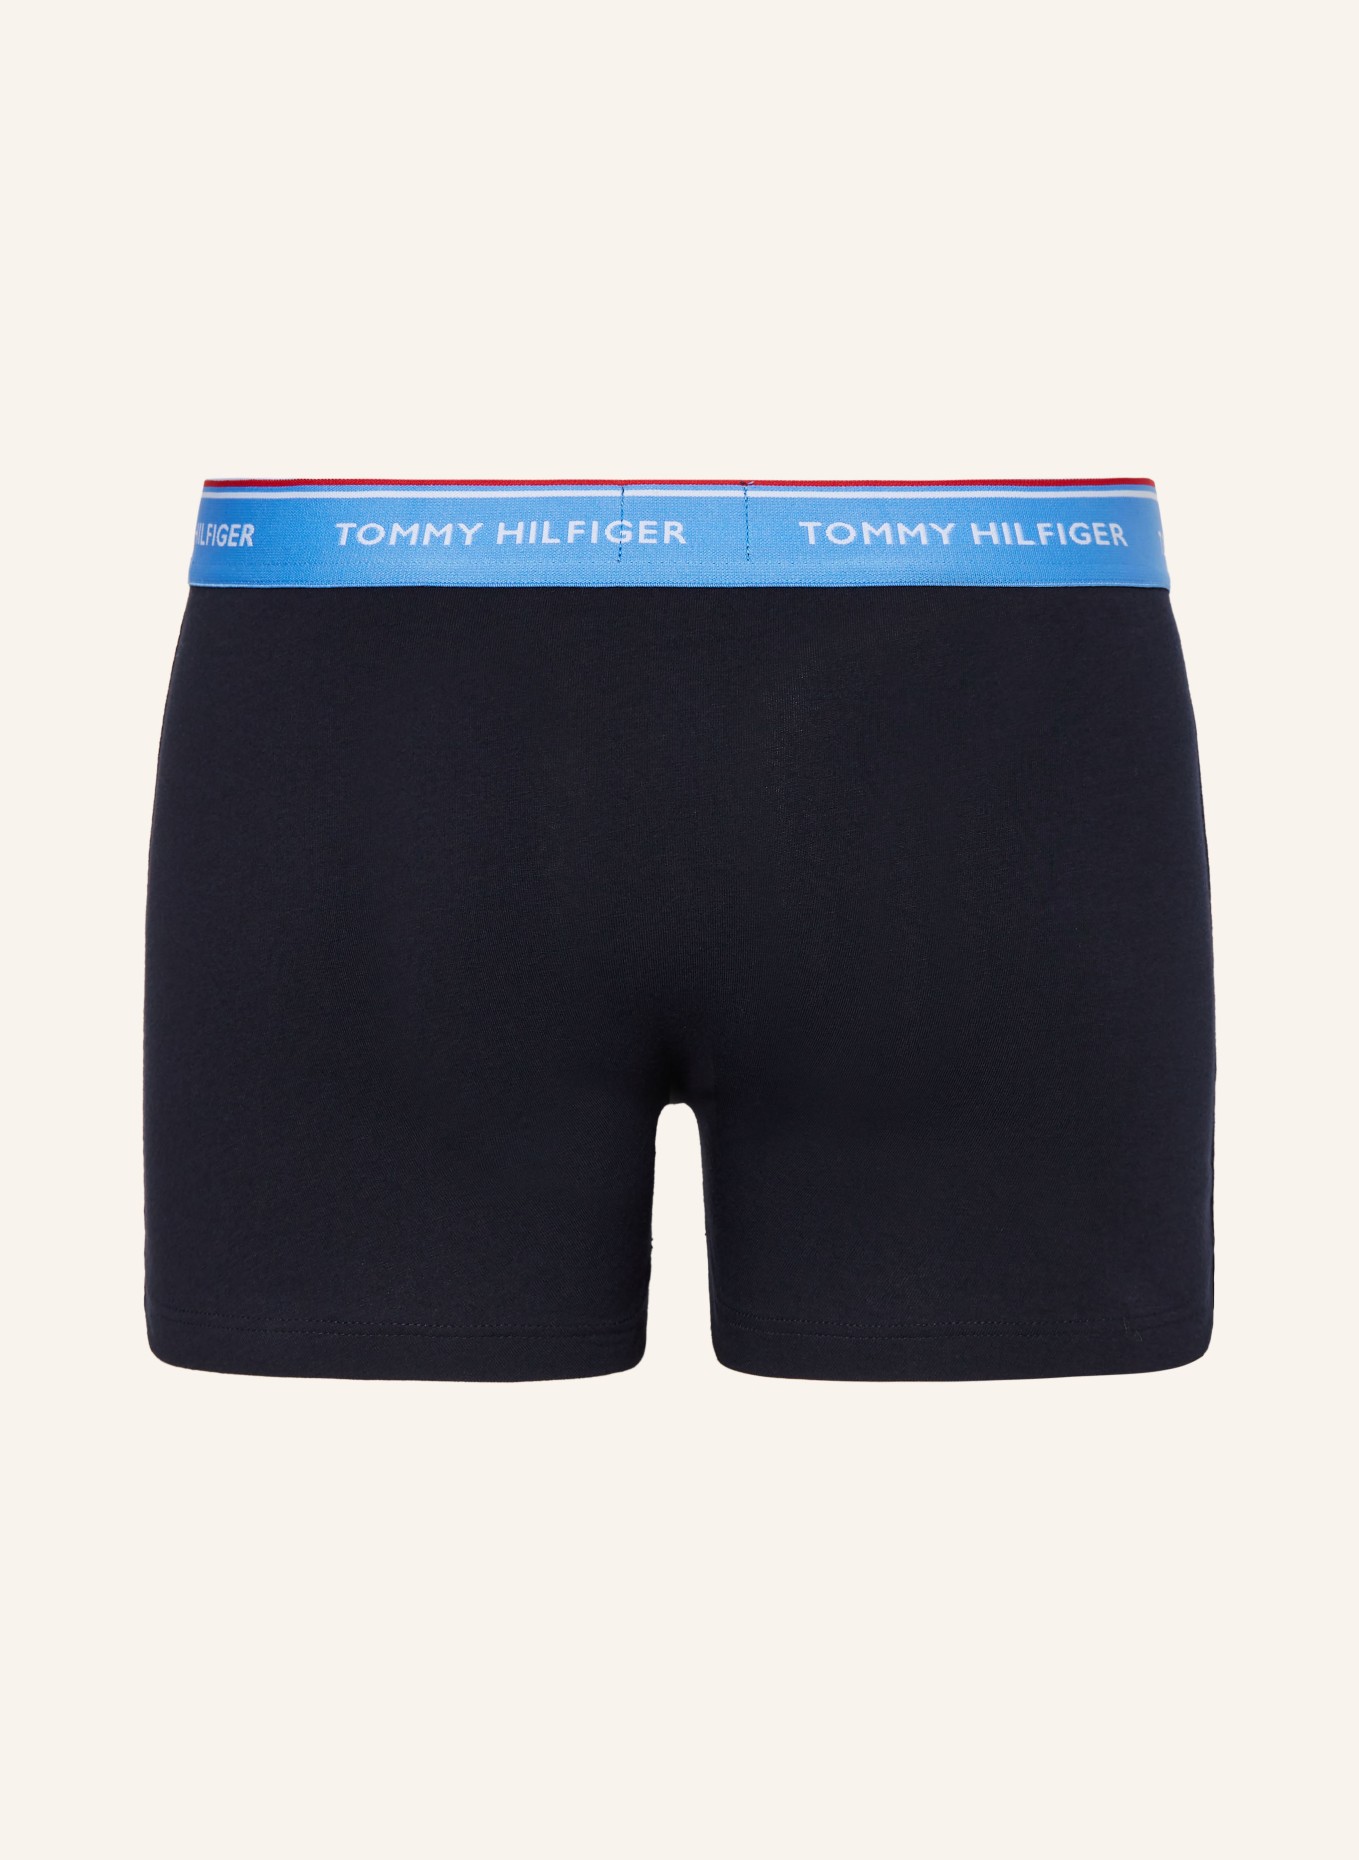 TOMMY HILFIGER 5er-Pack Boxershorts, Farbe: SCHWARZ (Bild 2)